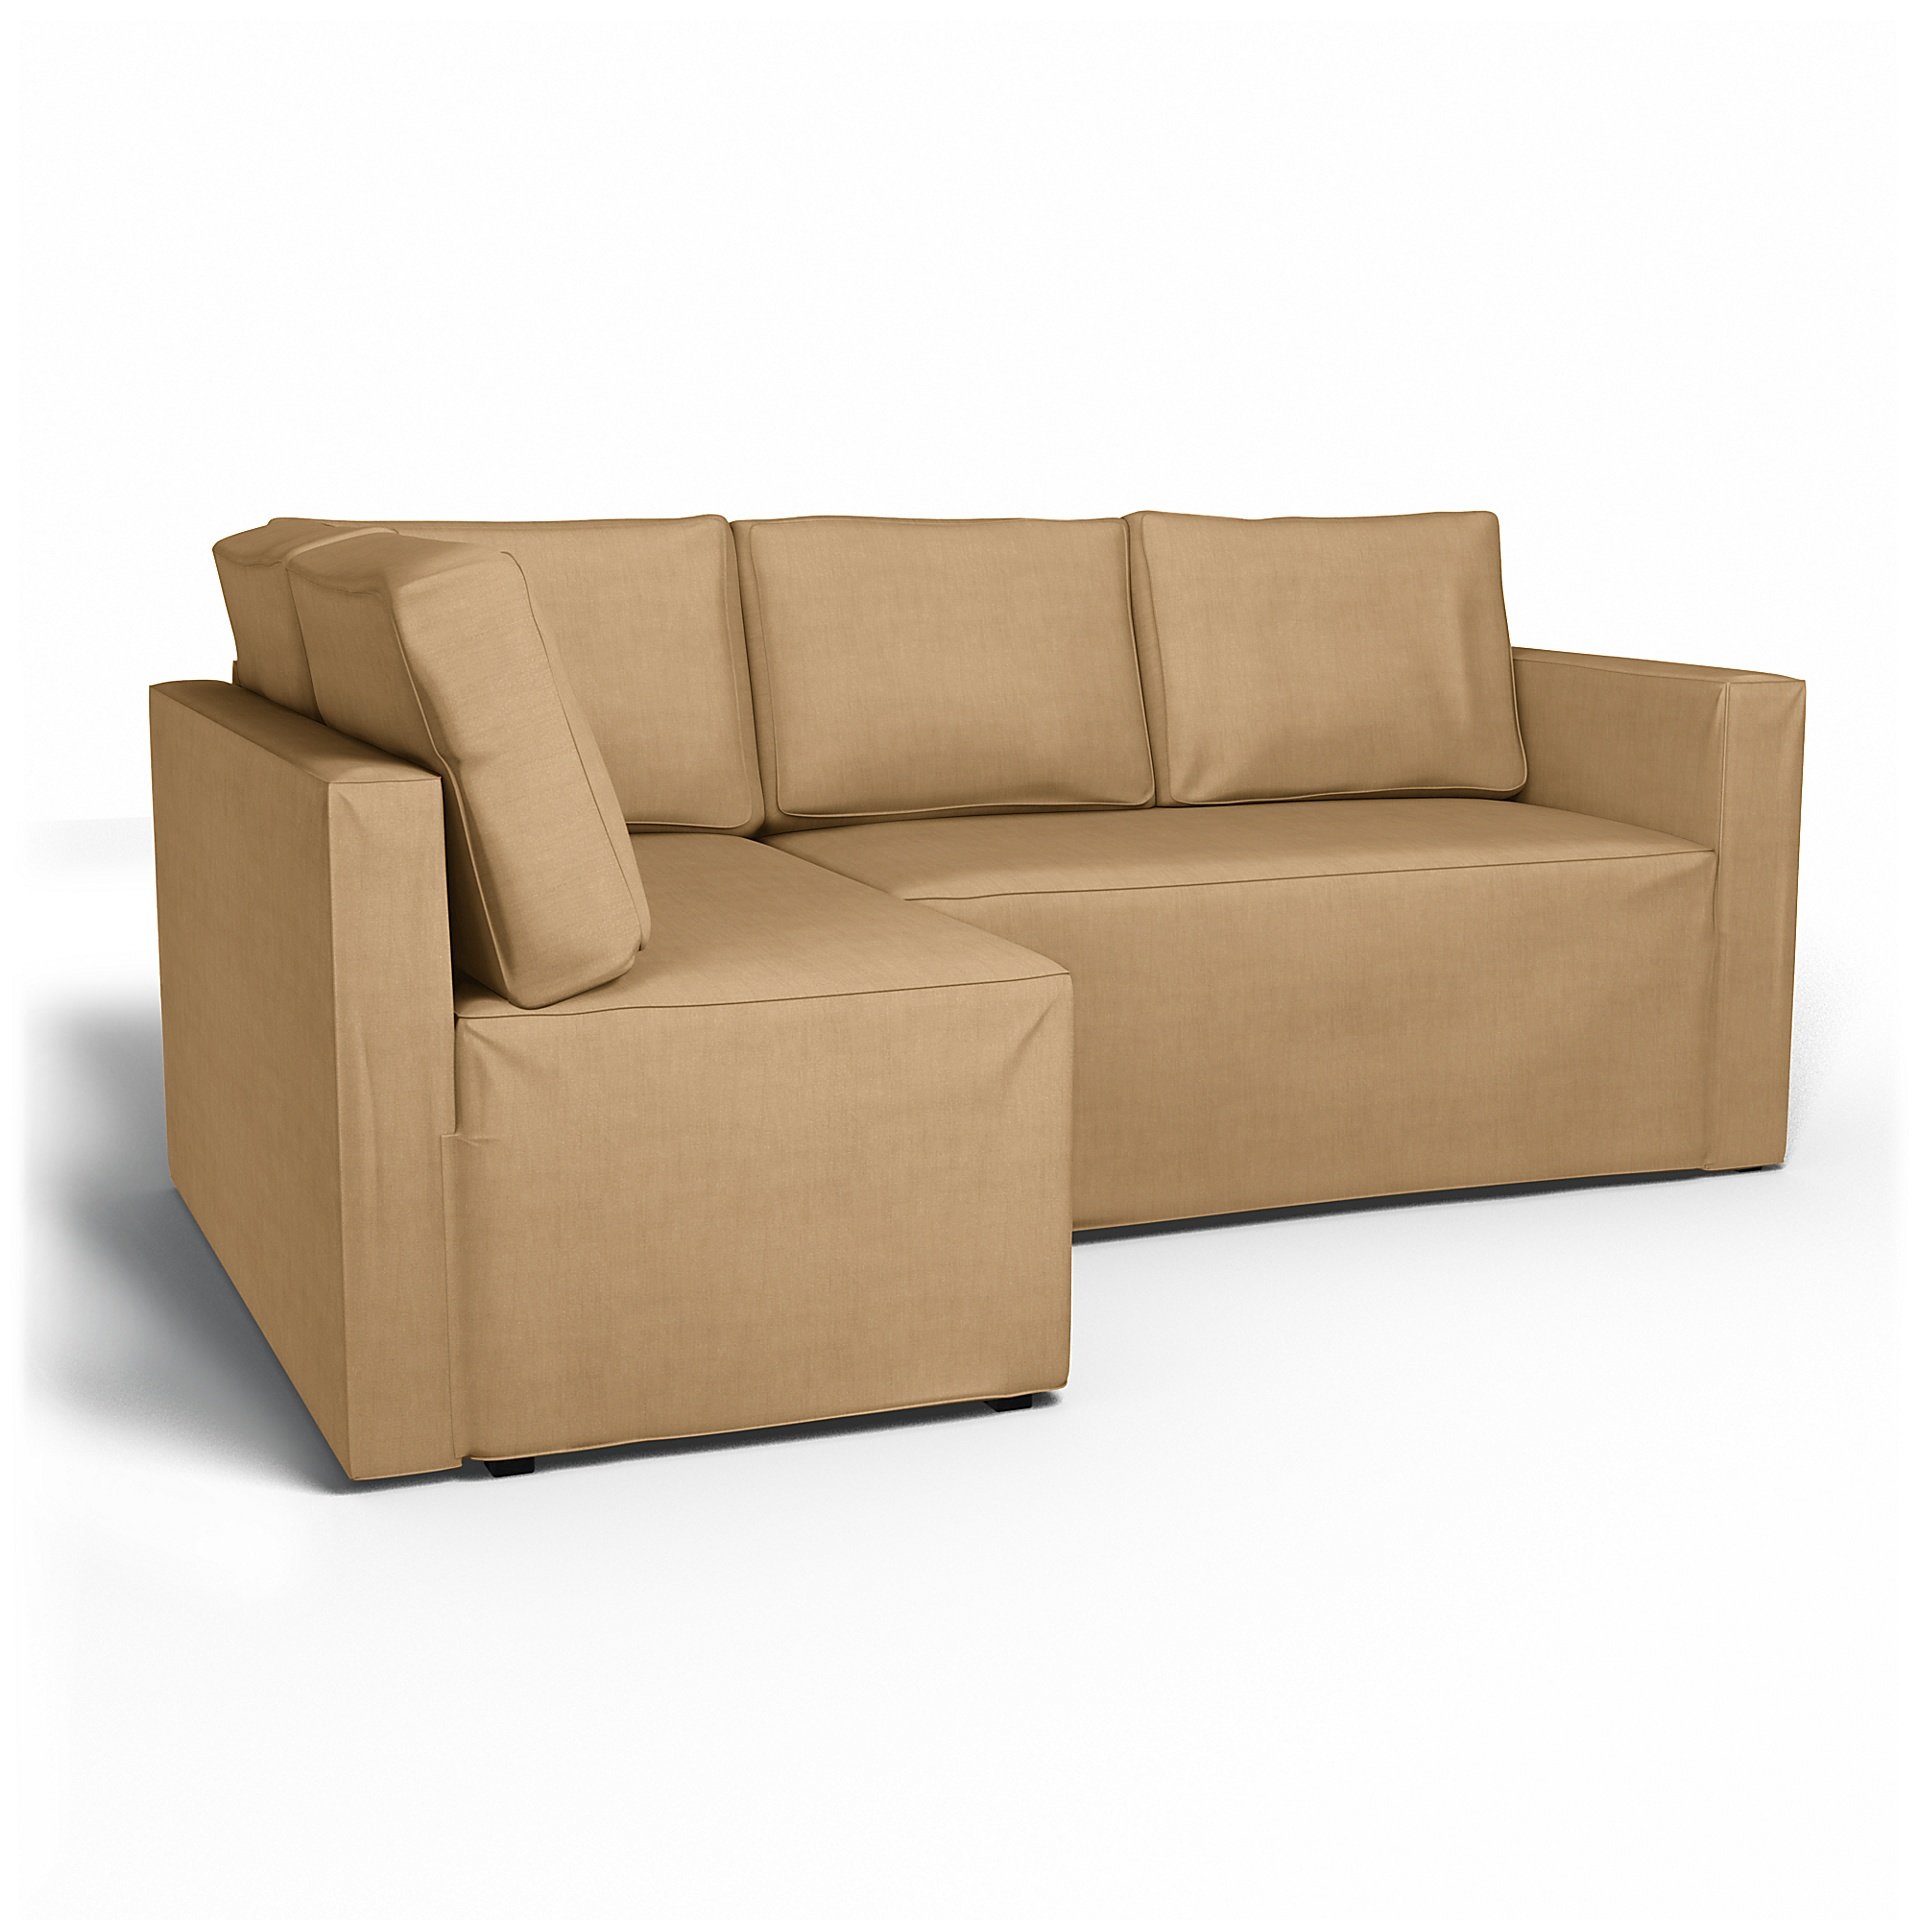 IKEA - Fagelbo Sofa Bed with Left Chaise Cover, Hemp, Linen - Bemz